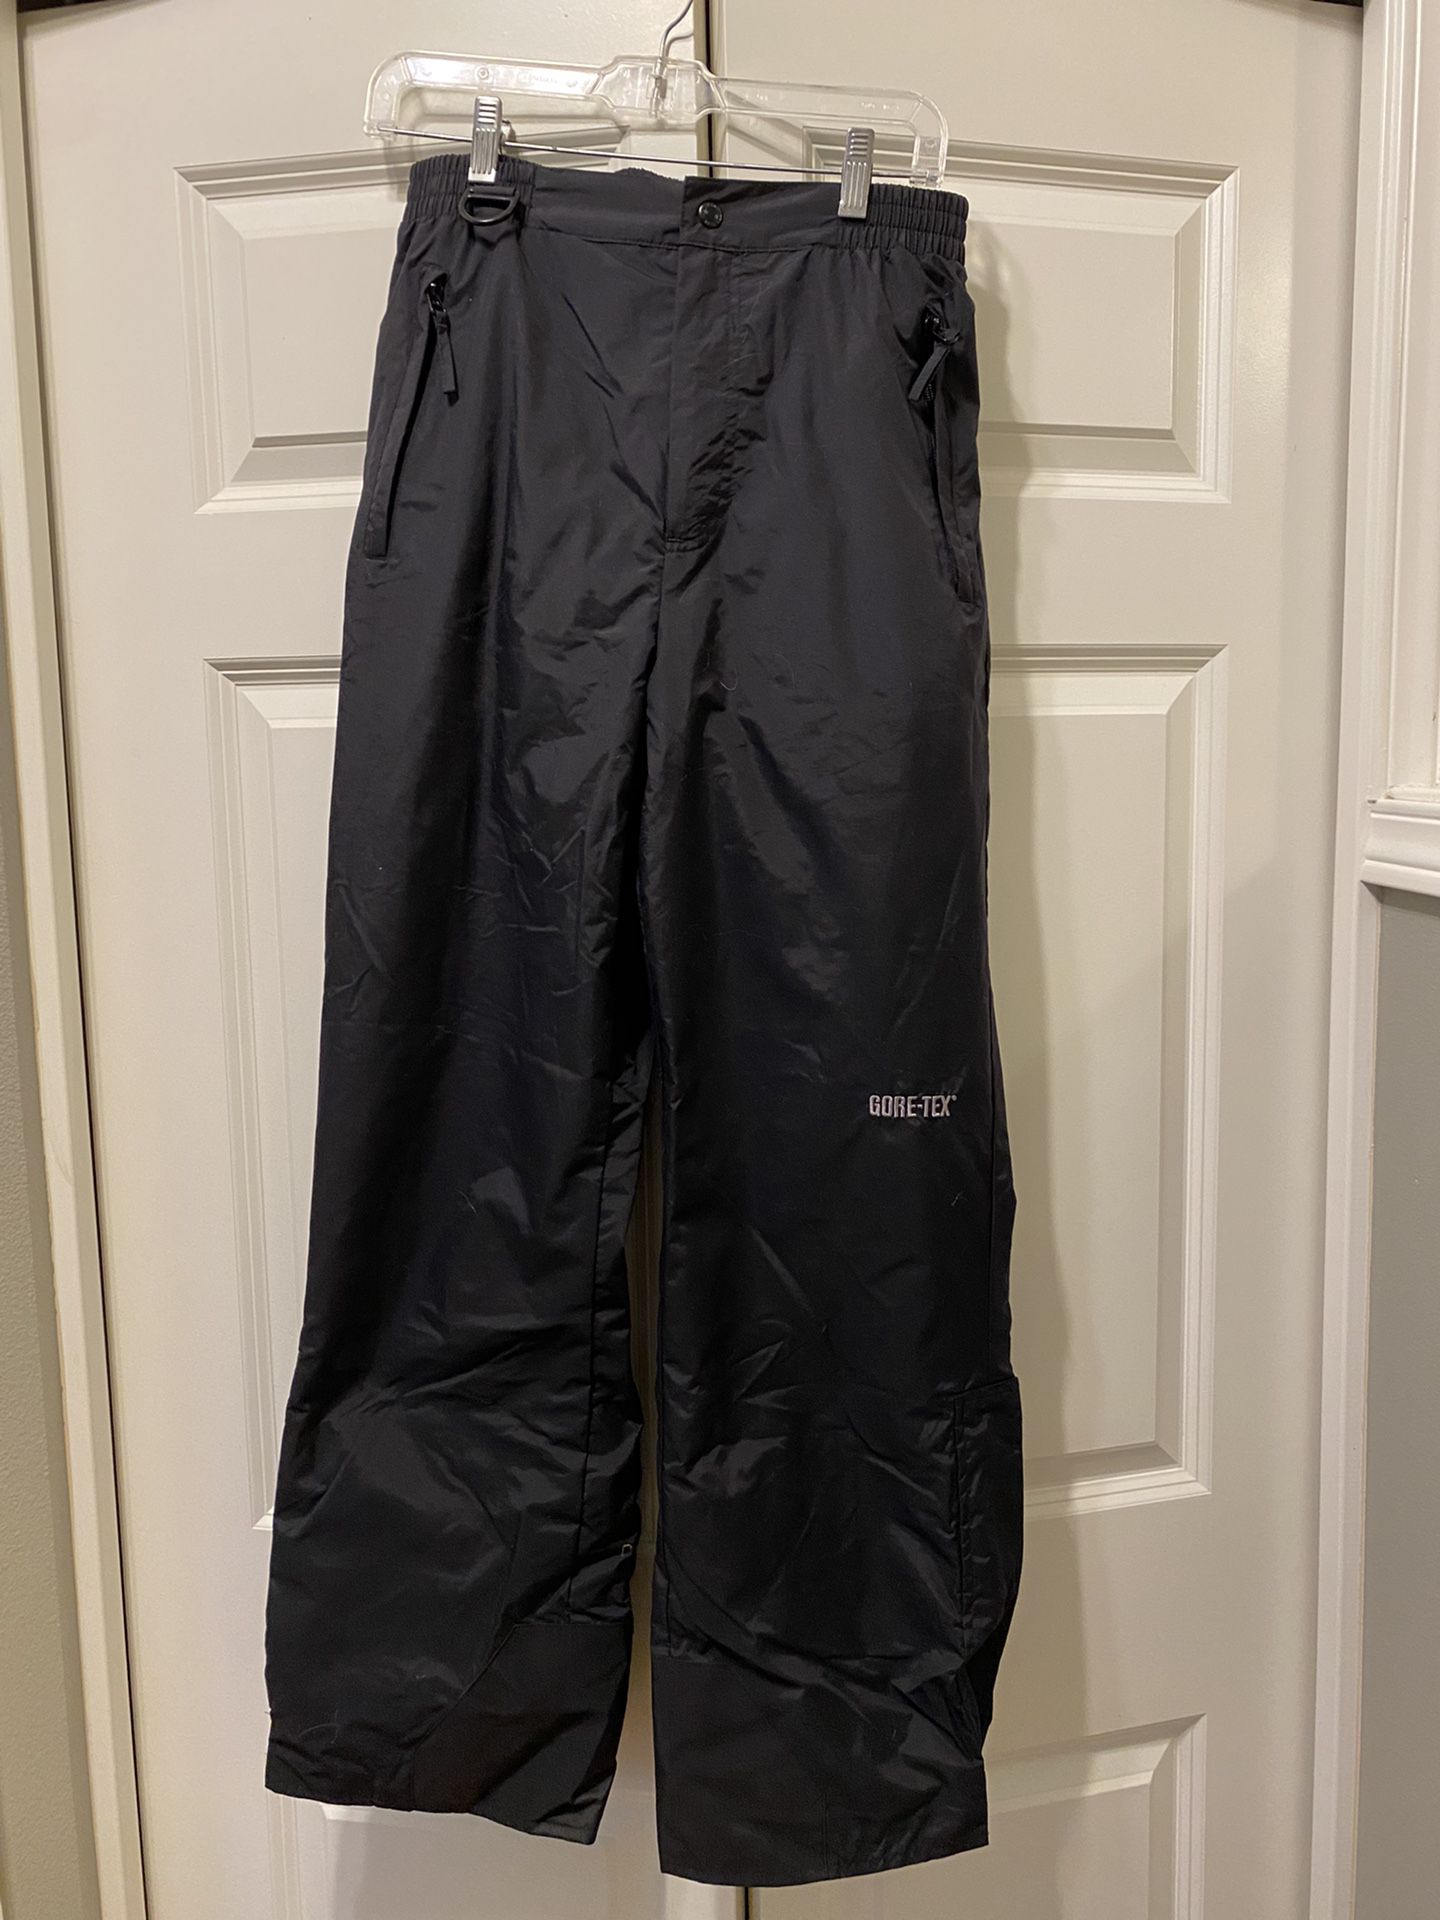 GORE-TEX Unisex Small Adult Black Ski Pants